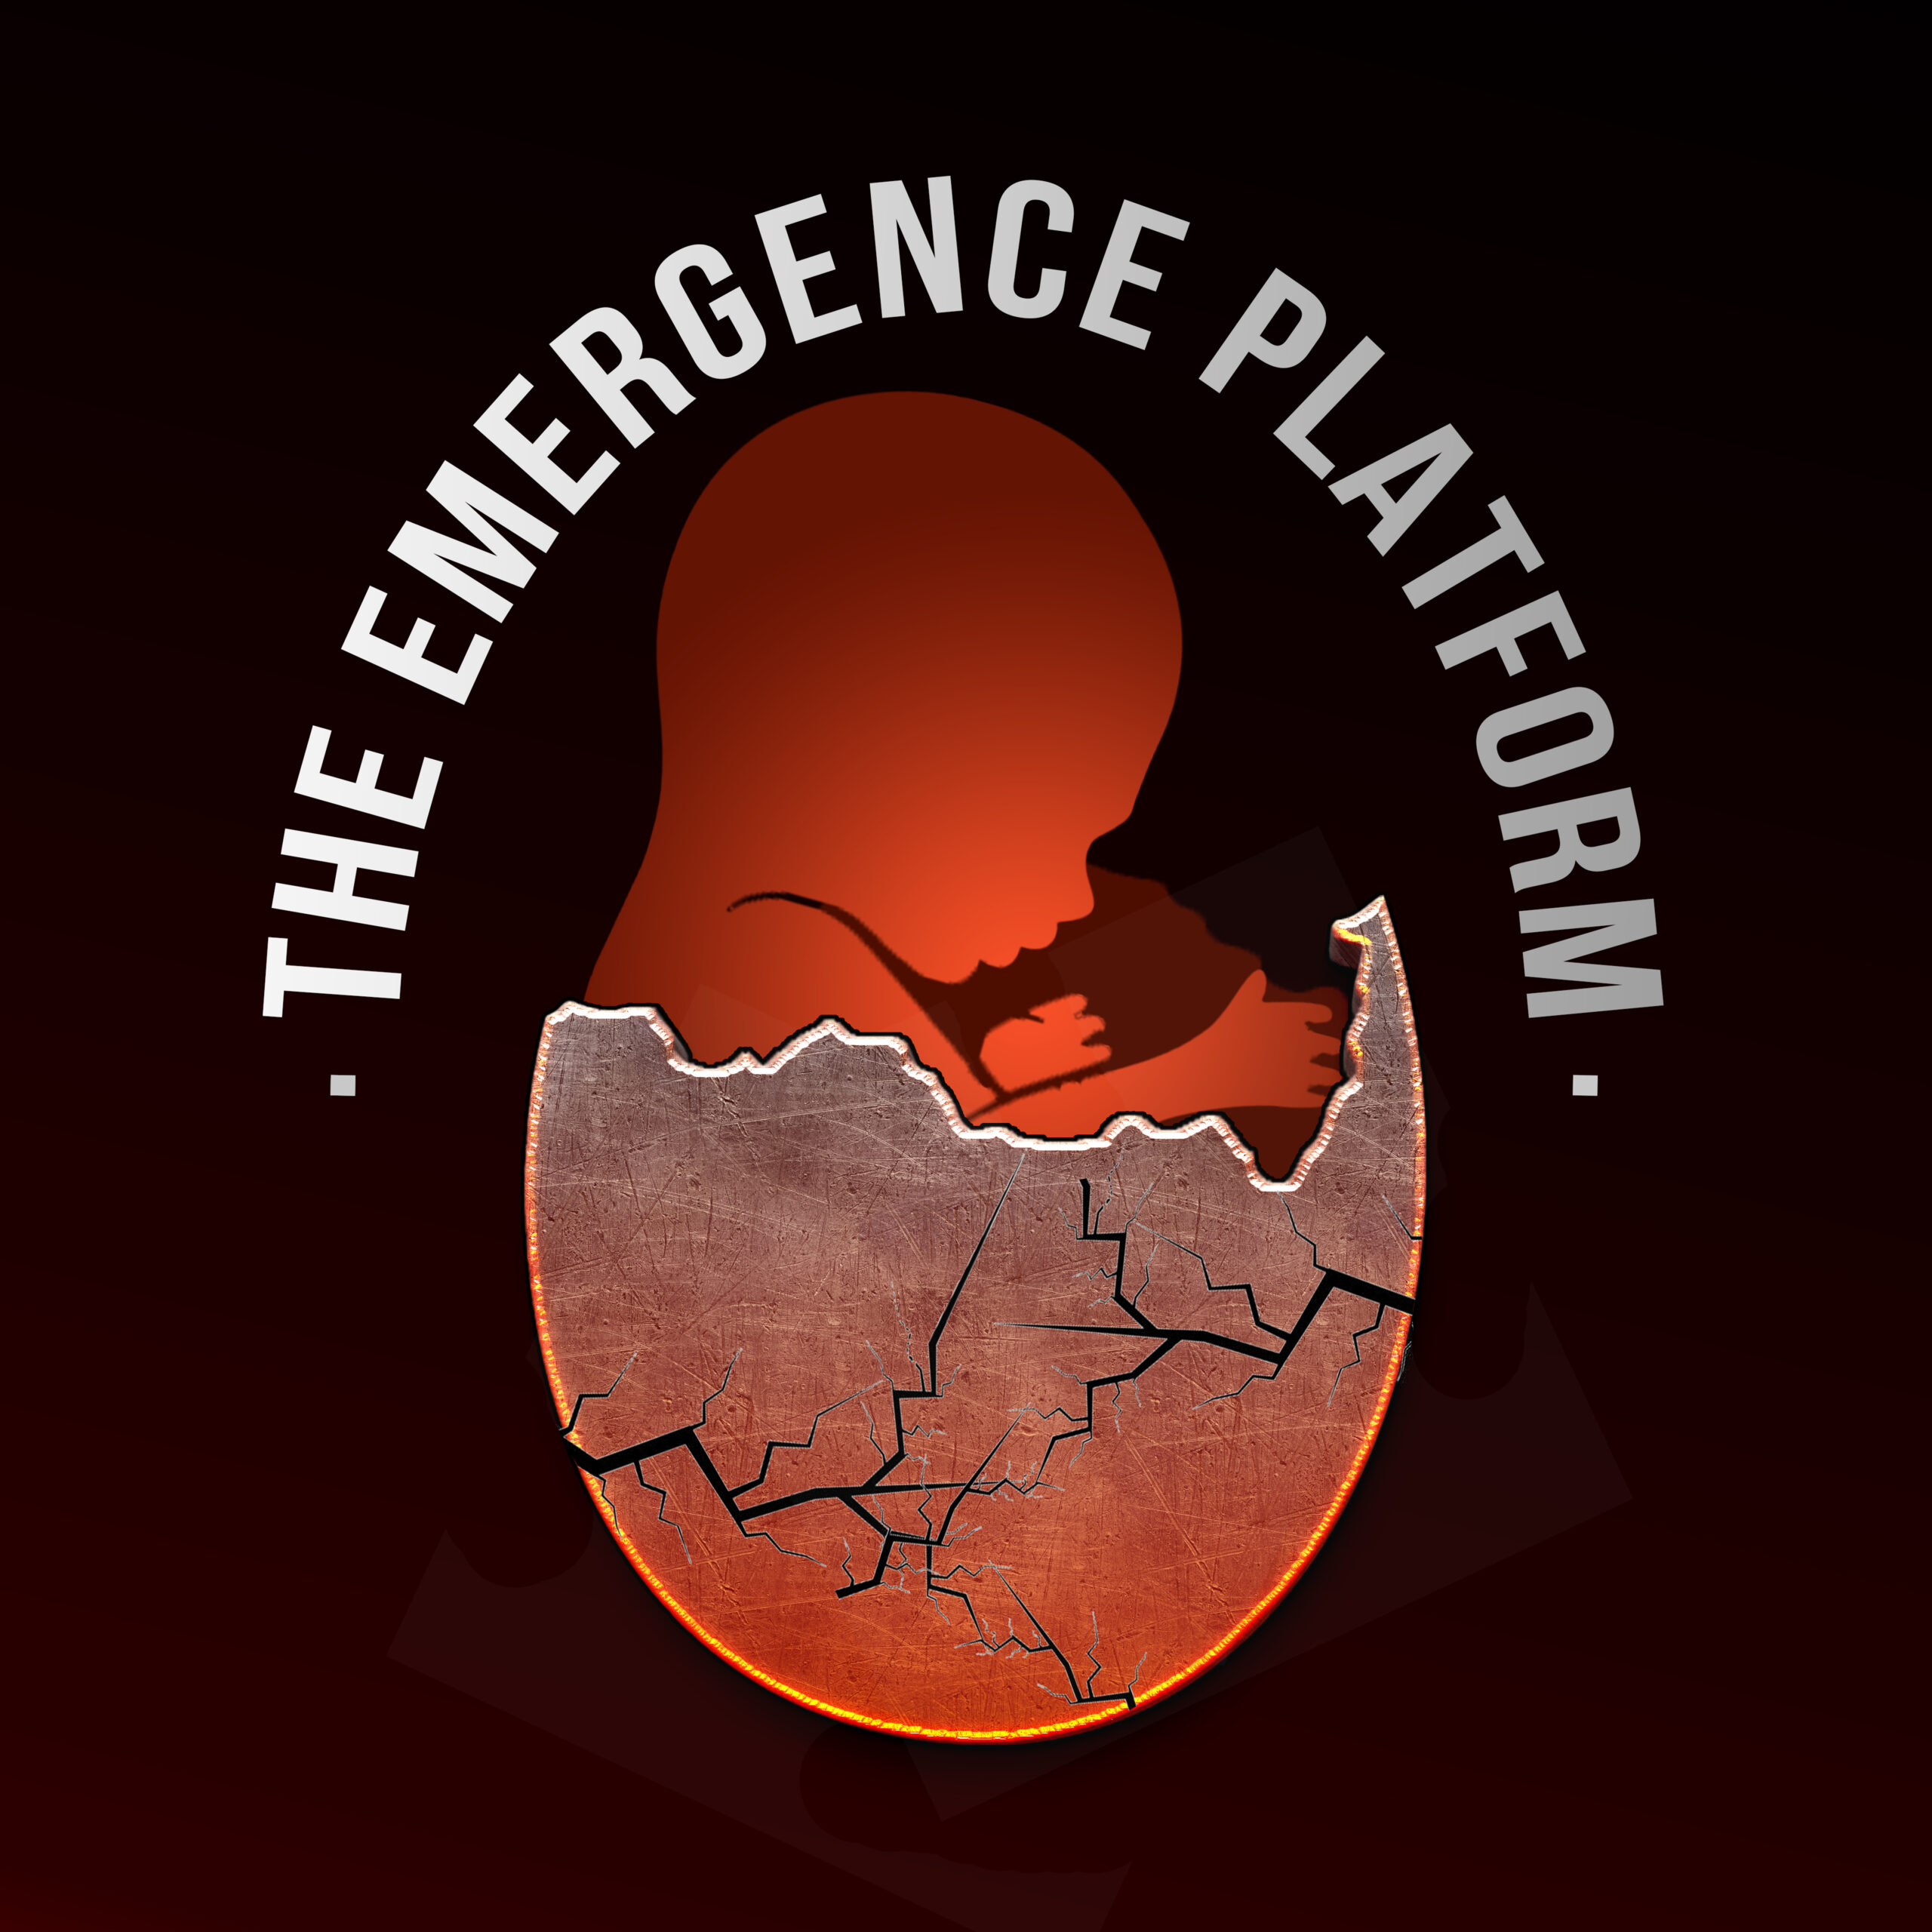 The Emergence Platform